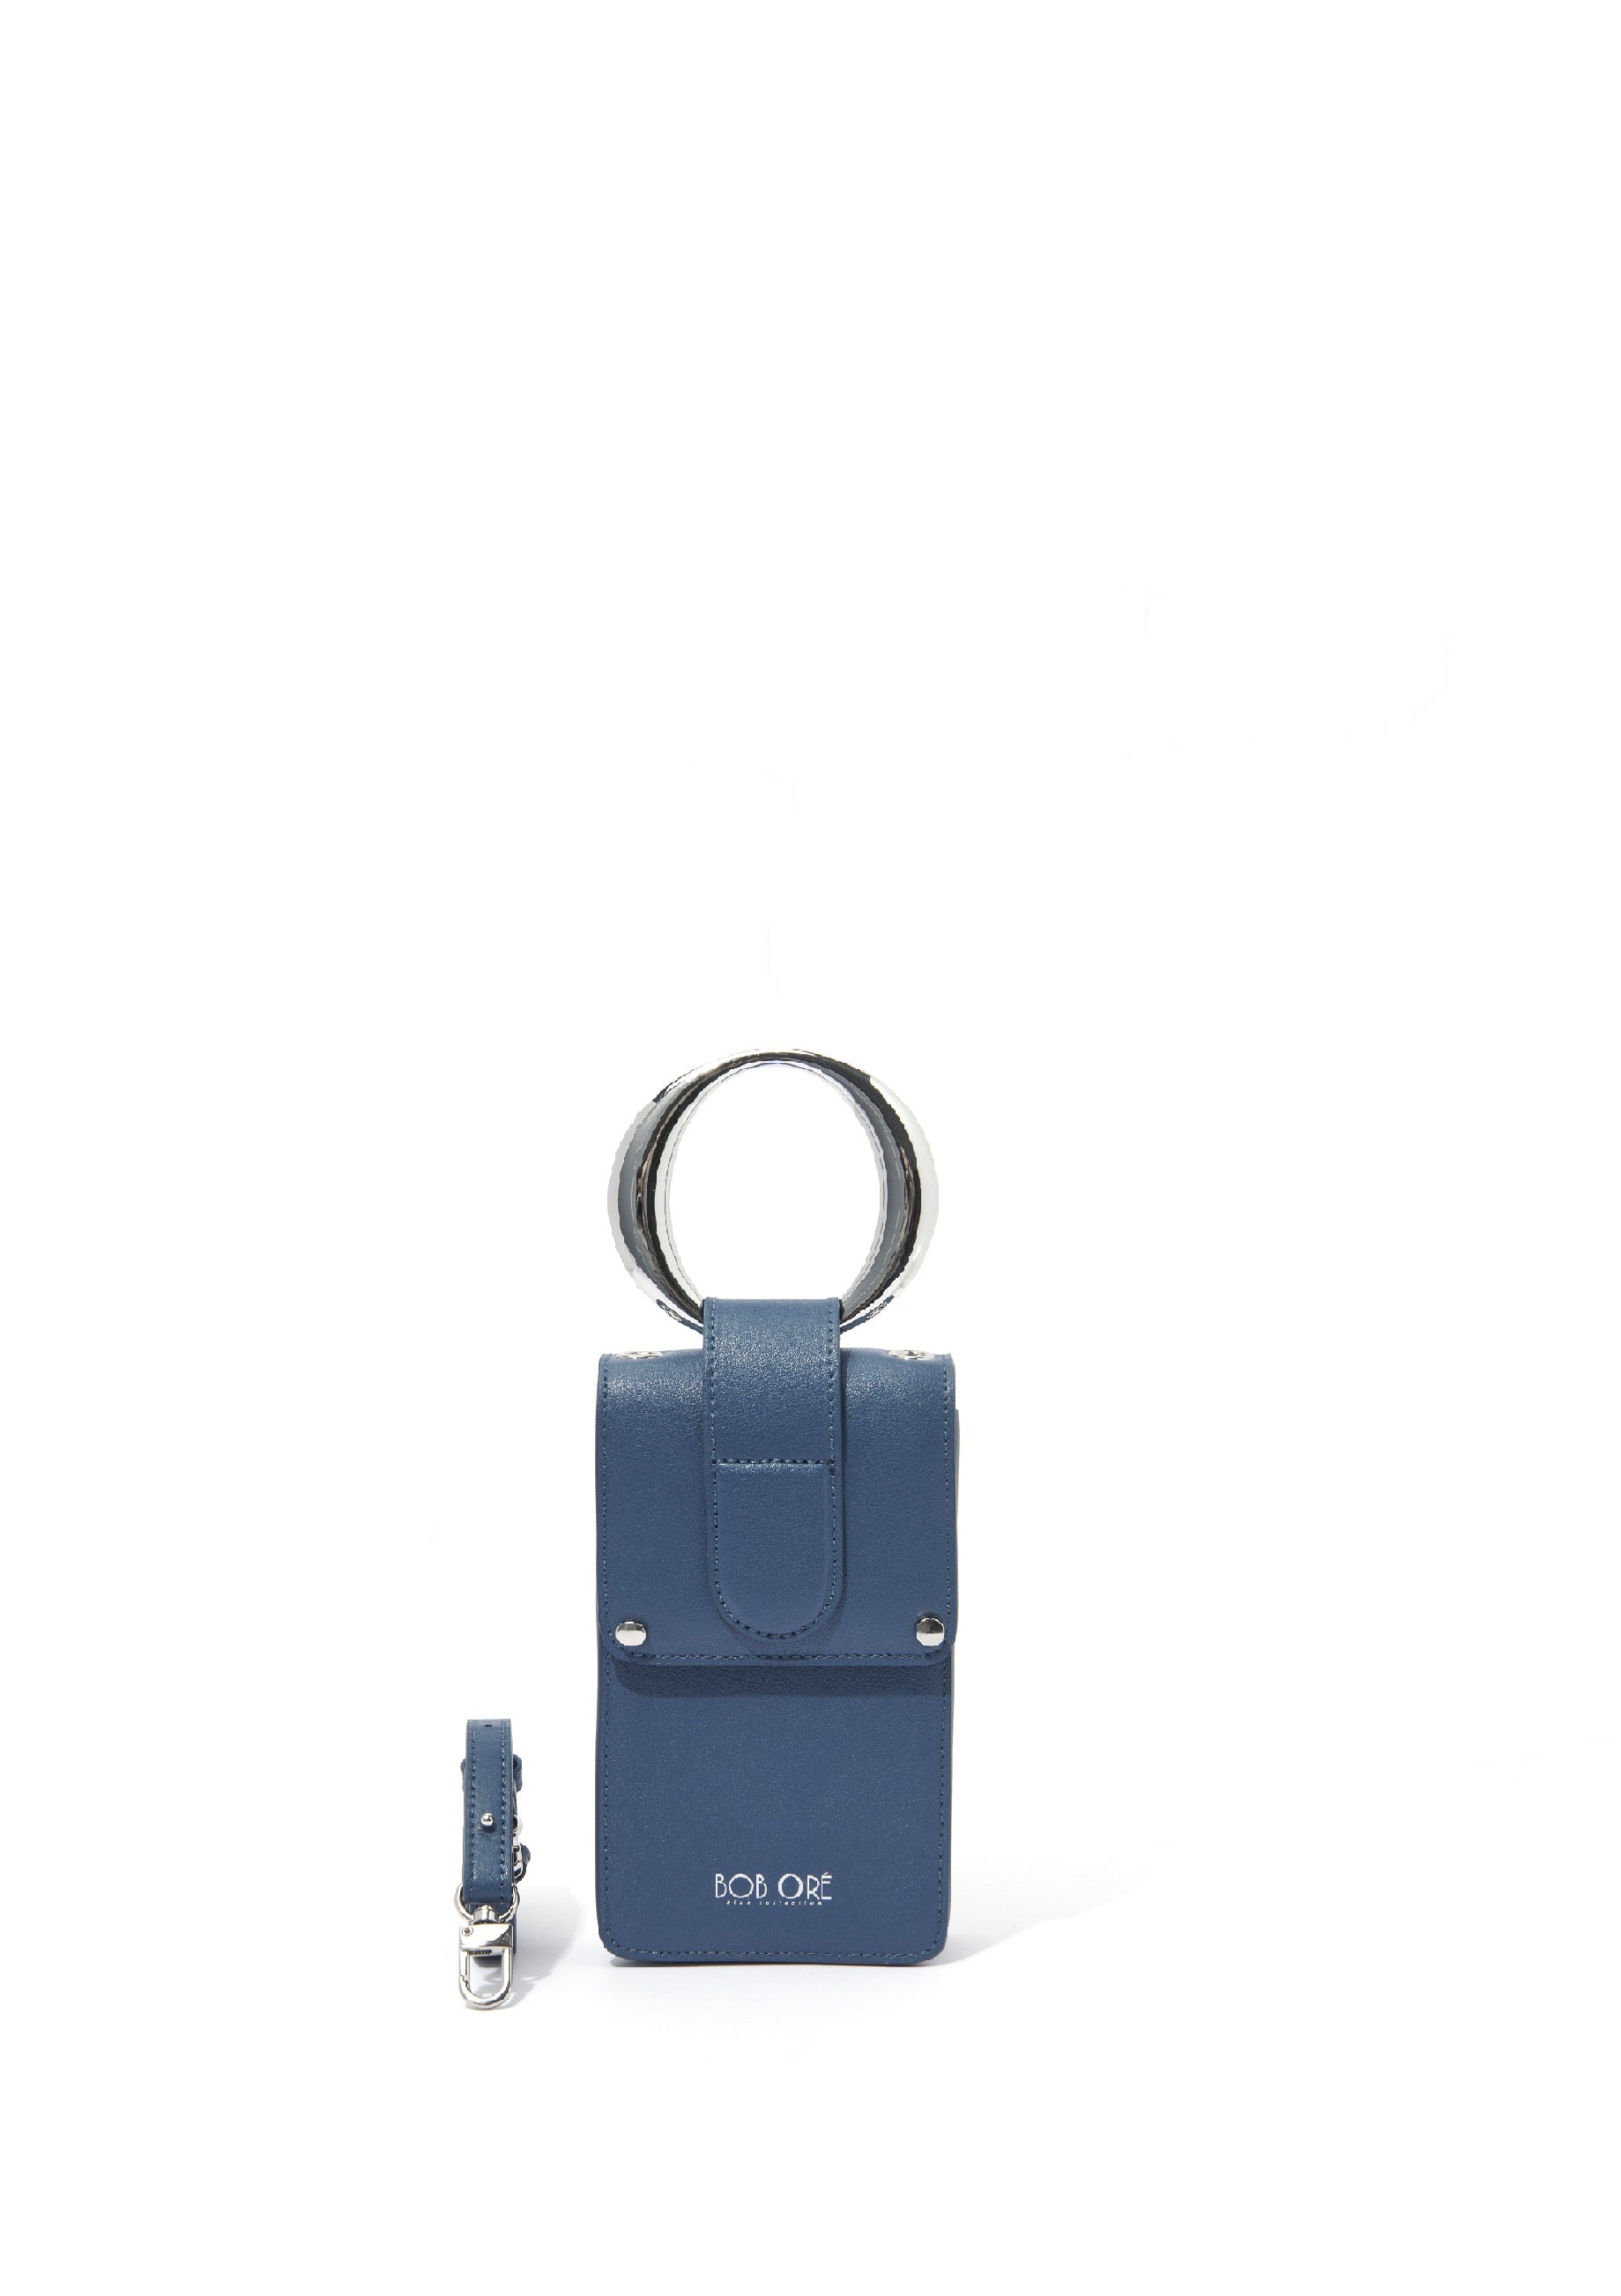 Cubesugar Cellphone Bag, Blue Bob Oré